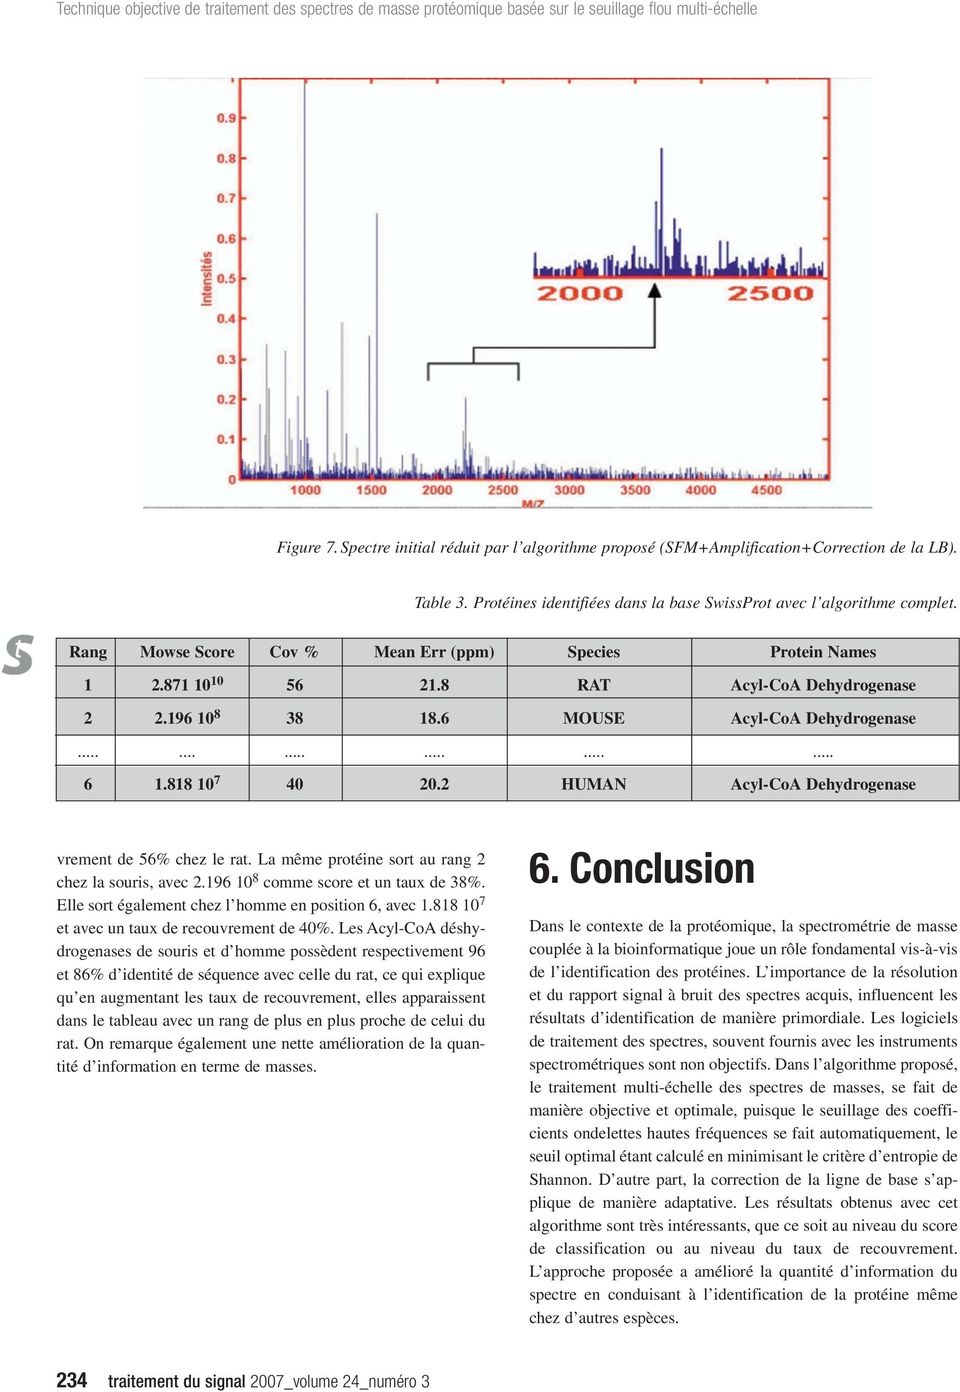 Rang Mowse Score Cov % Mean Err (ppm) Species Protein Names 1.871 10 10 56 1.8 RAT Acyl-CoA Dehydrogenase.196 10 8 38 18.6 MOUSE Acyl-CoA Dehydrogenase.................. 6 1.818 10 7 40 0.